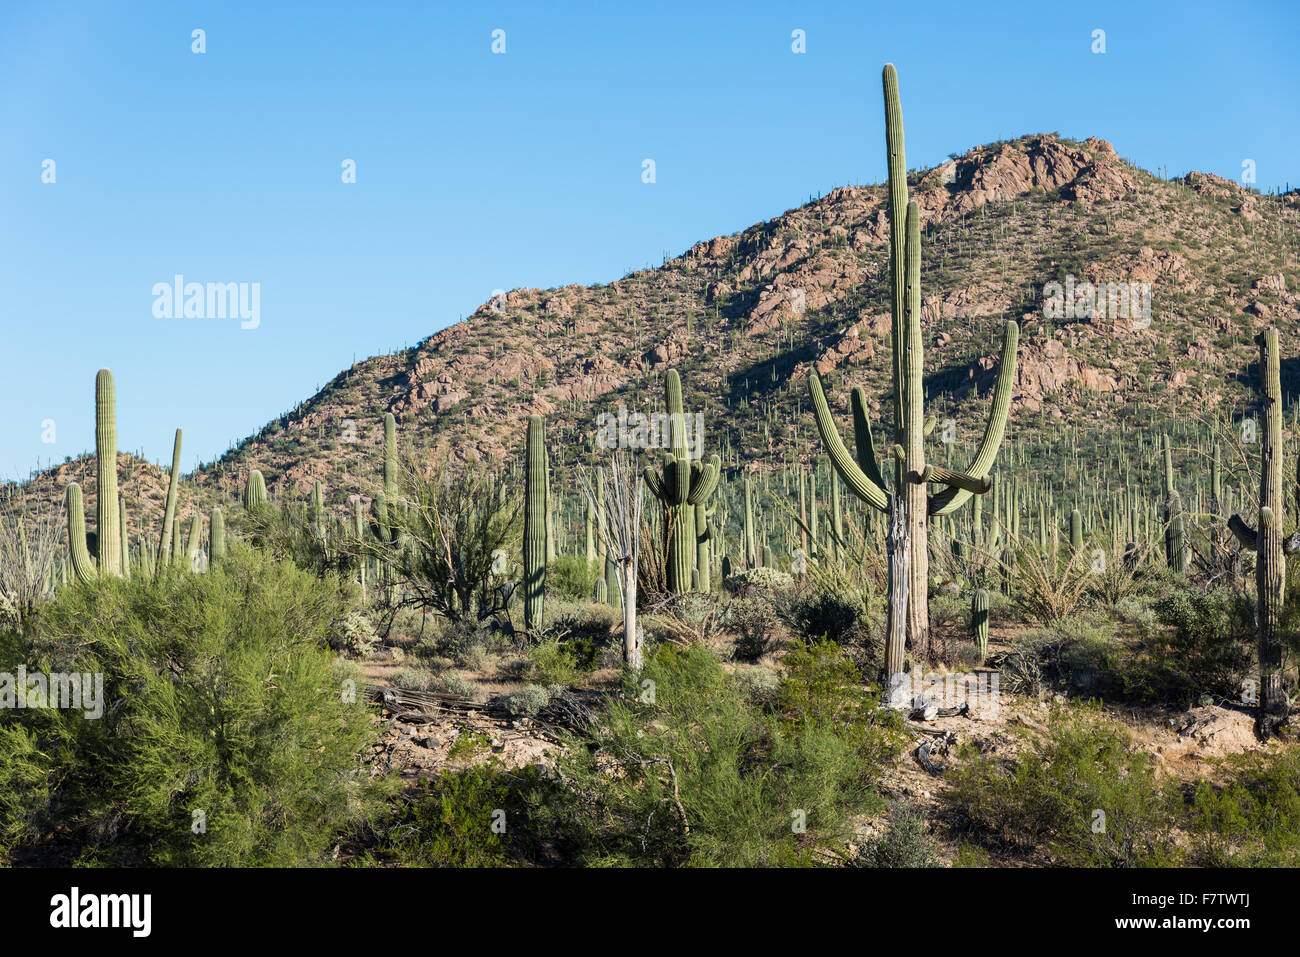 Riesigen Saguaro-Kaktus-Wald umfasst Granithügel. Saguaro National Park, Tucson, Arizona, USA. Stockfoto